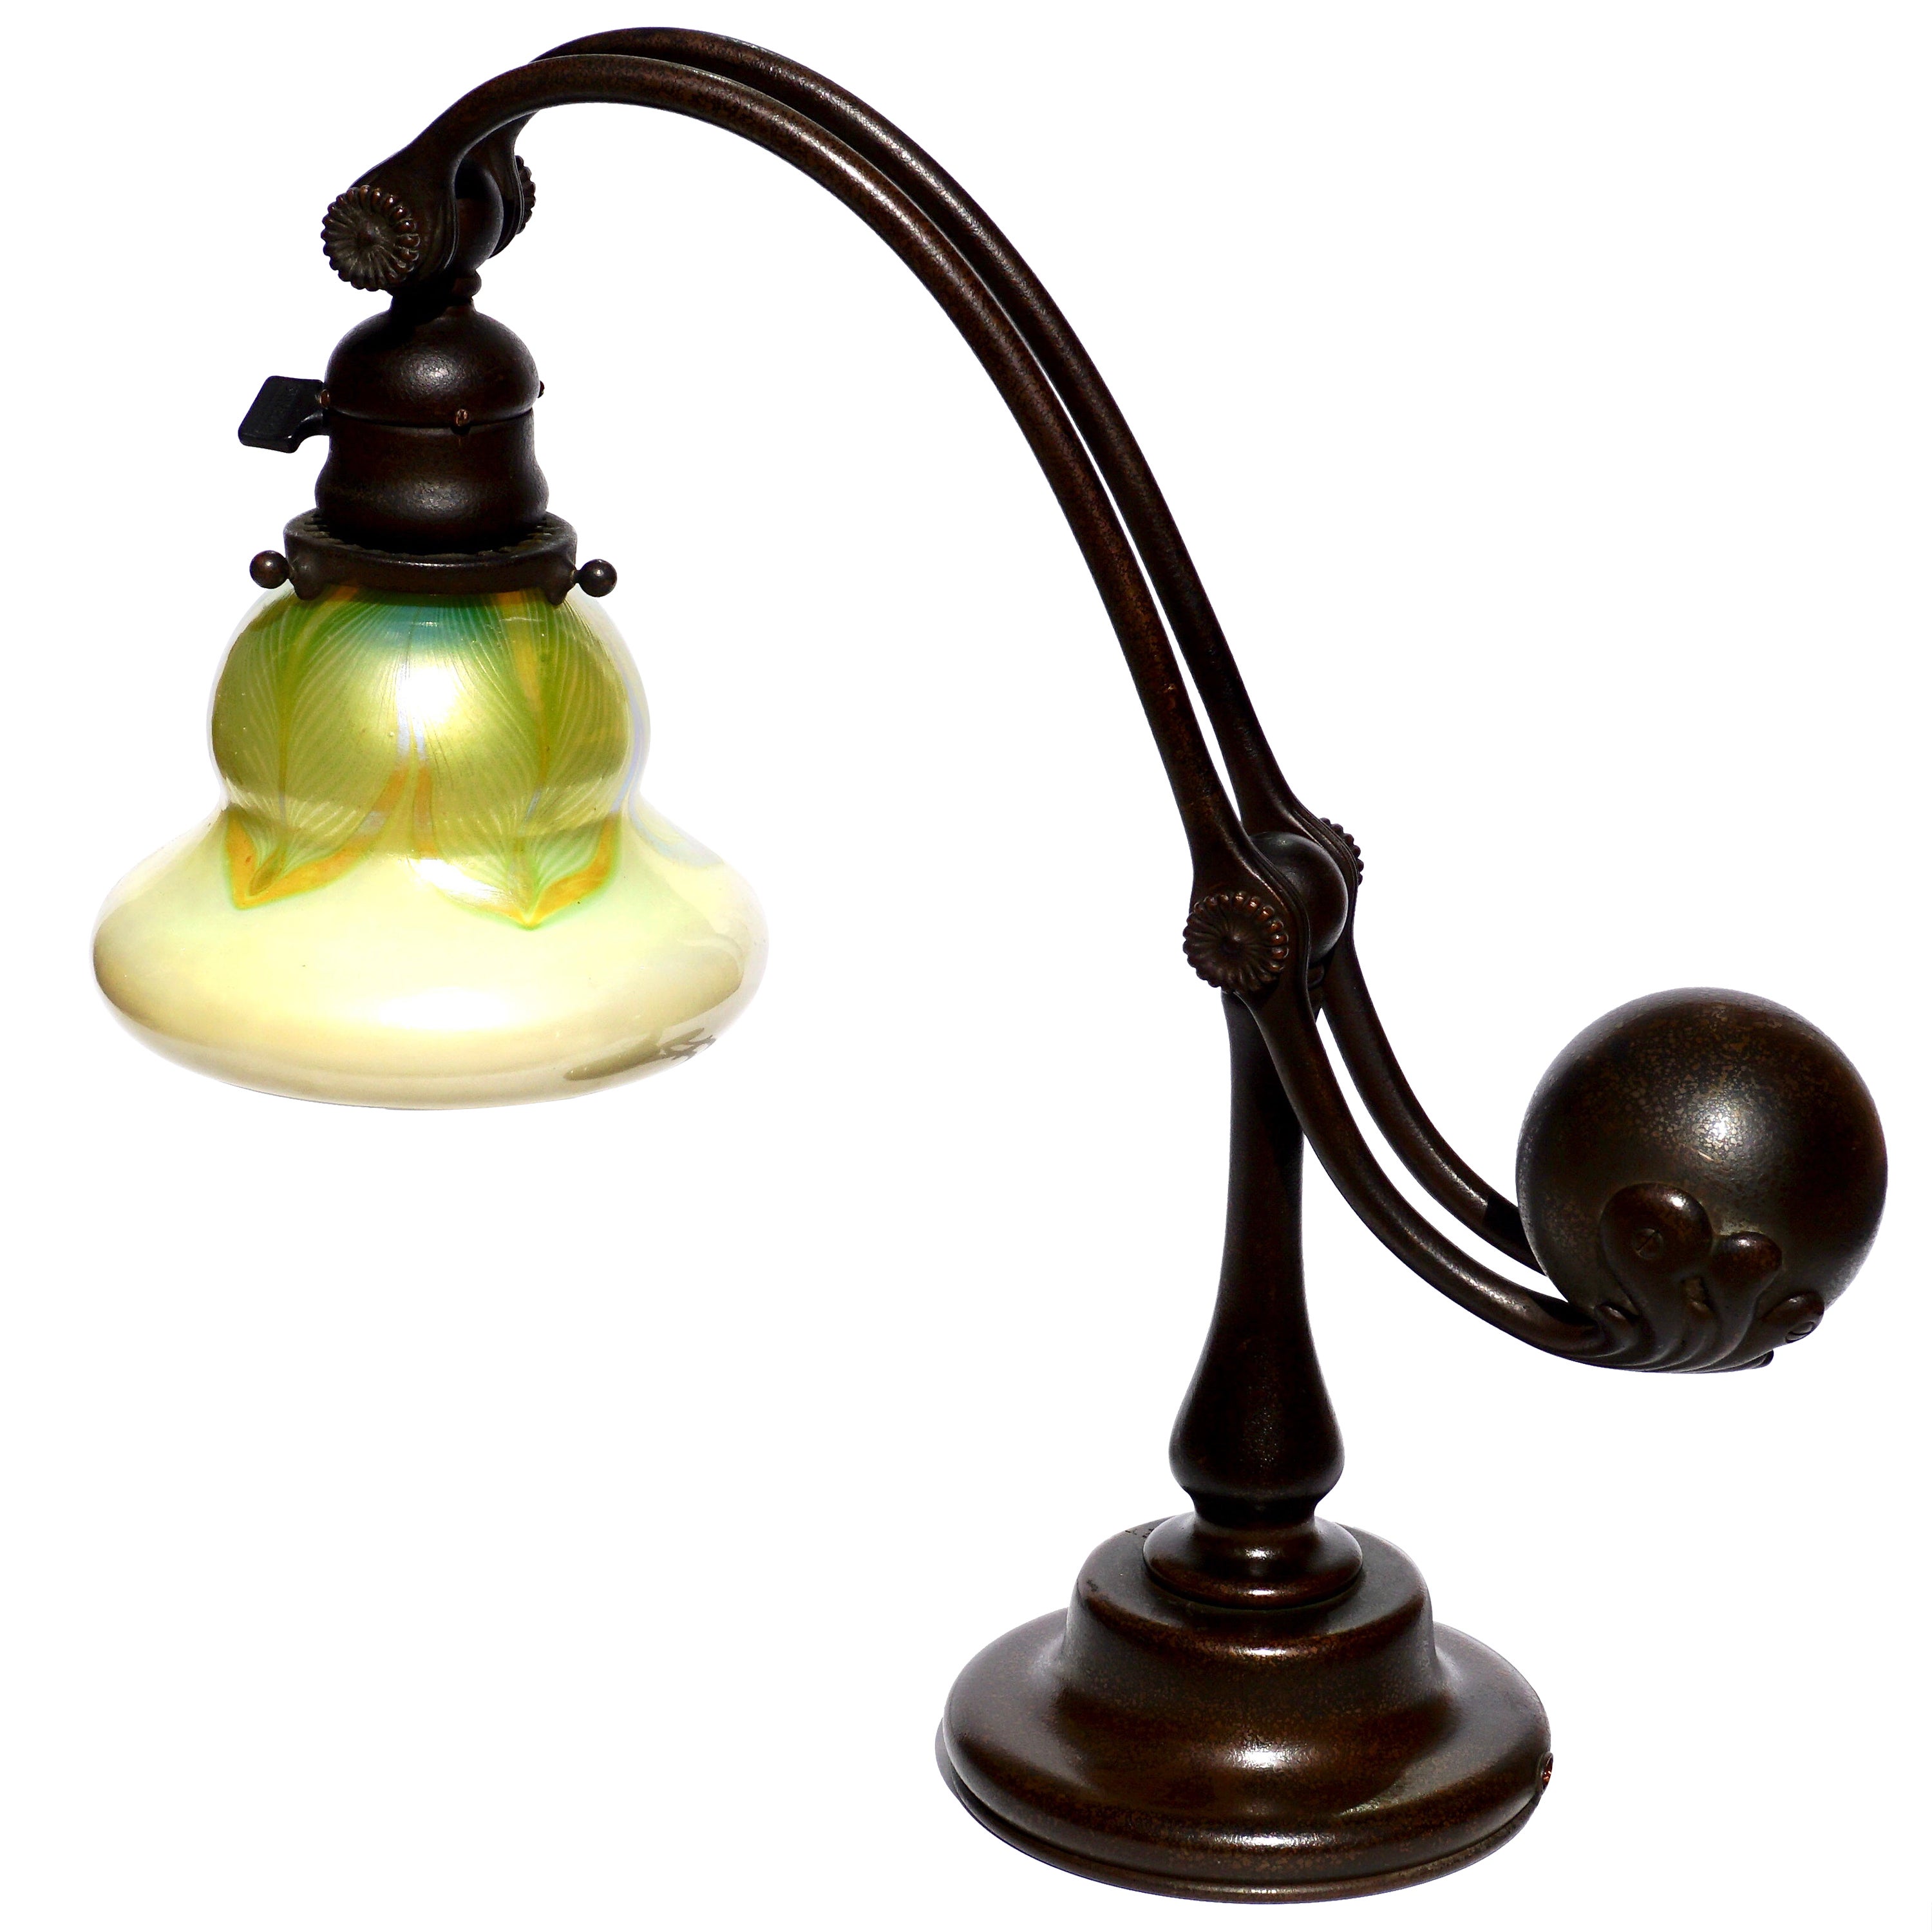 Tiffany Studios Counter Balance Table Lamp